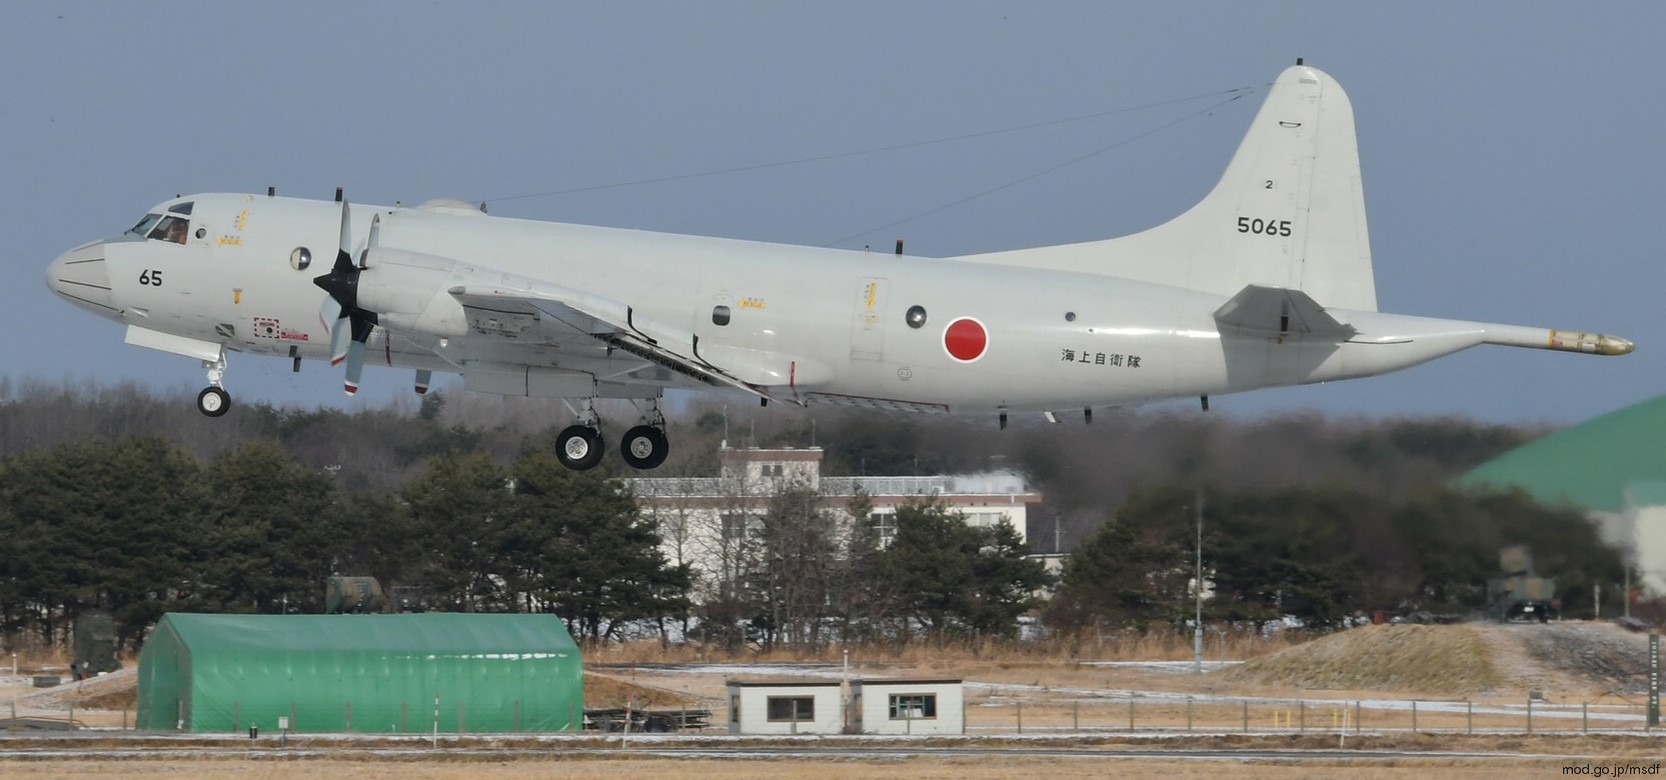 kawasaki p-3c orion patrol aircraft mpa japan maritime self defense force jmsdf 5065 04